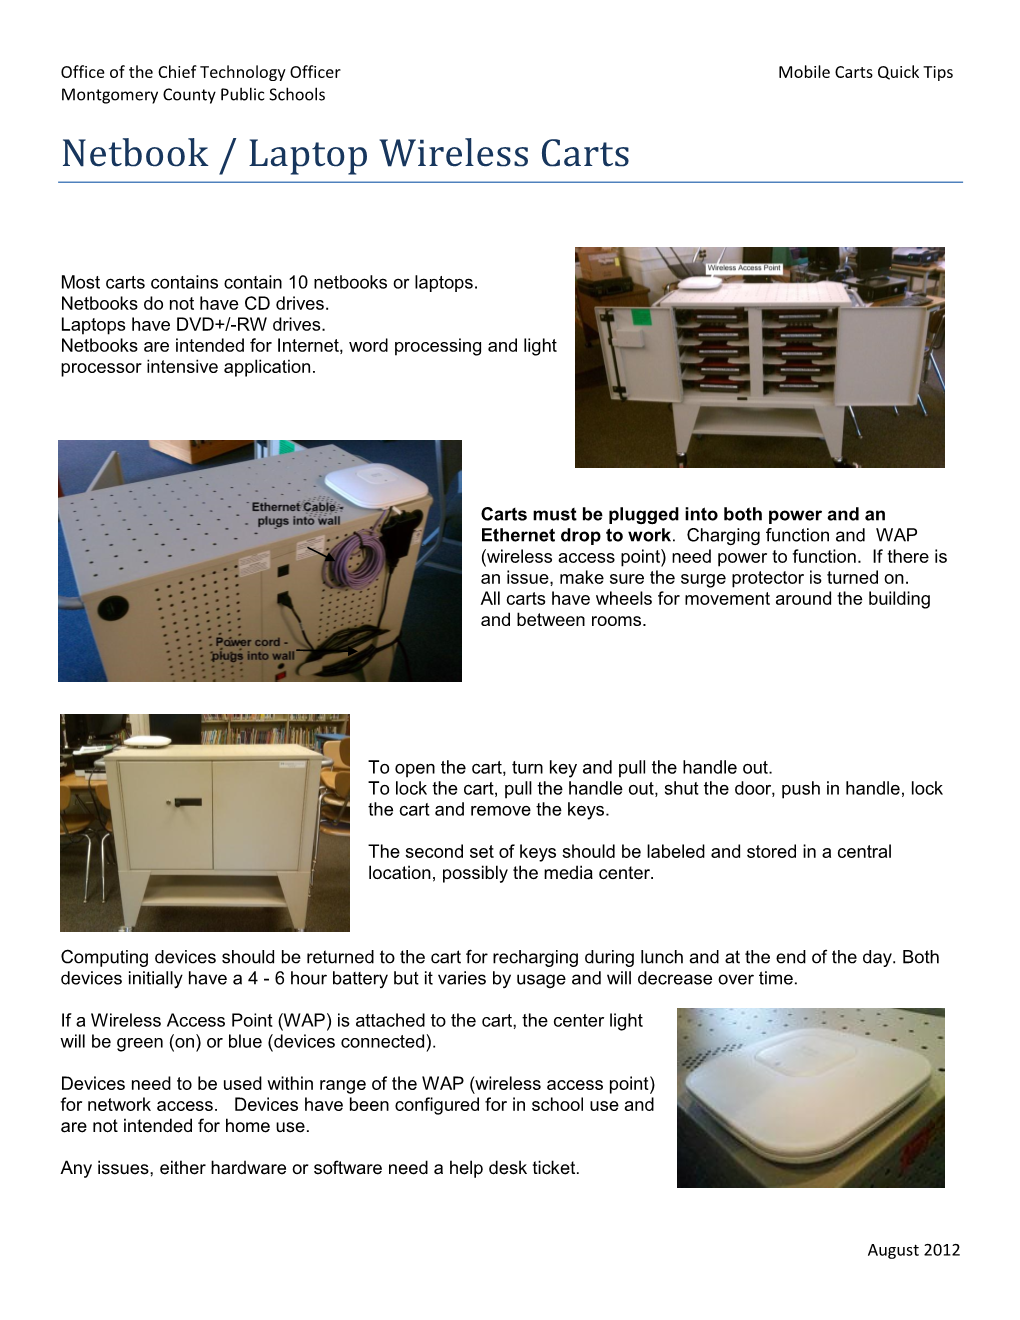 Netbook / Laptop Wireless Carts